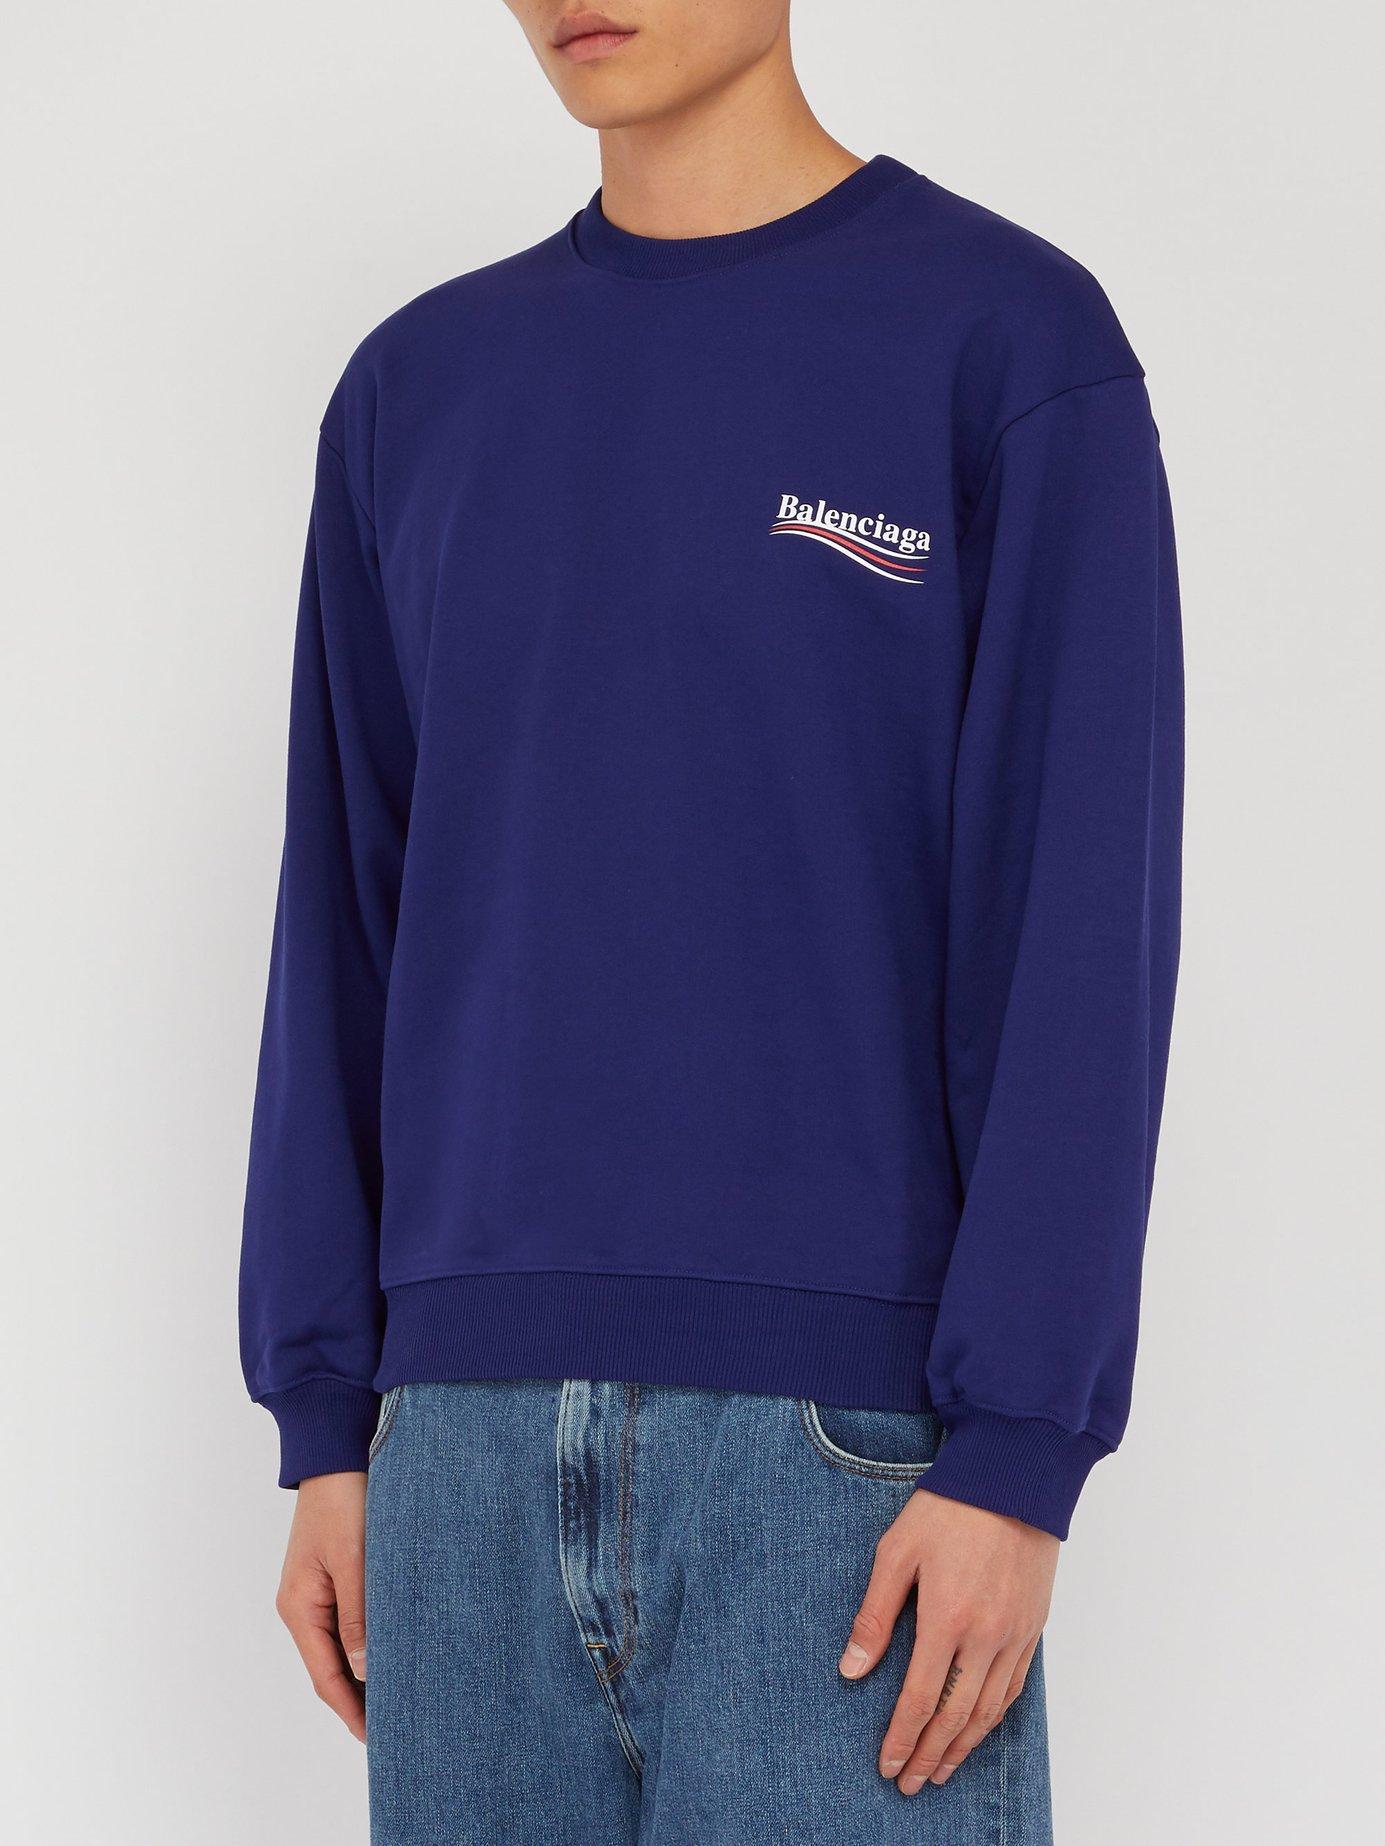 Balenciaga Logo Print Cotton Jersey Sweatshirt in Blue for Men - Lyst